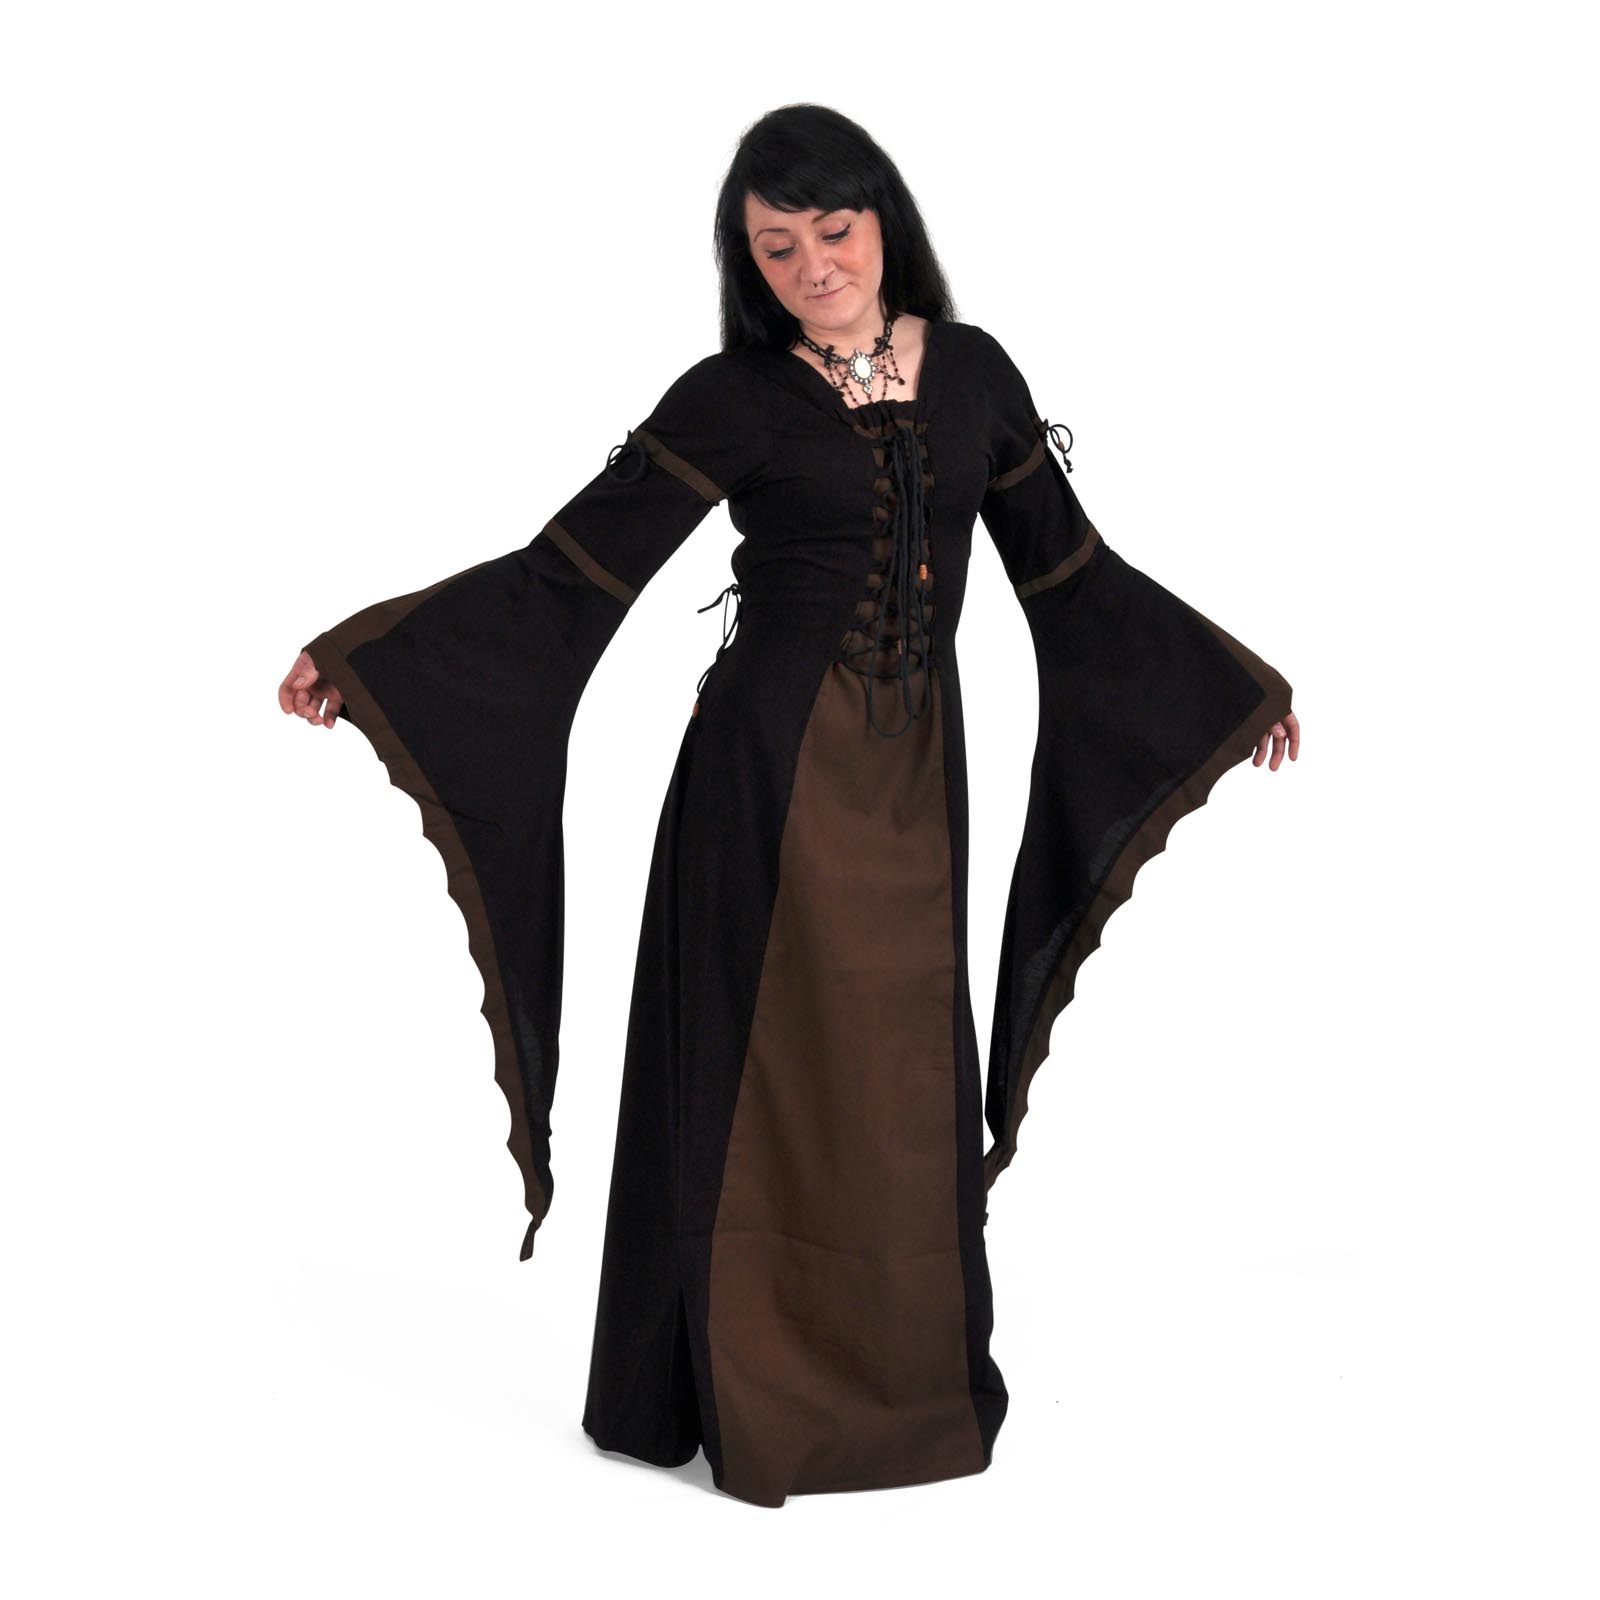 Leona - Middeleeuwse jurk zwart-bruin